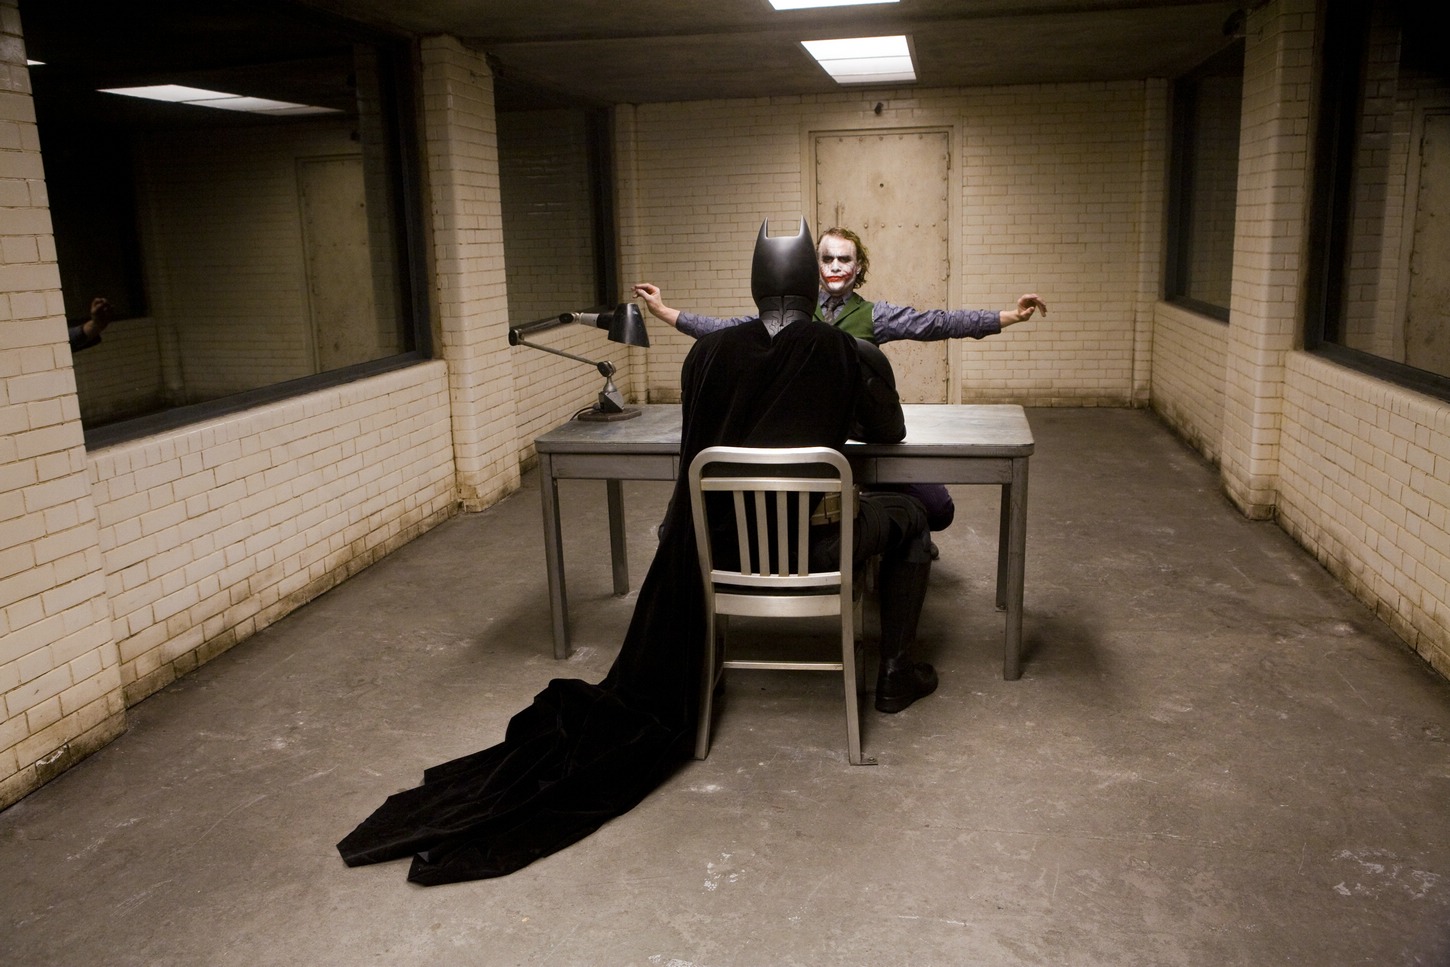 joker and batman interrogation scene